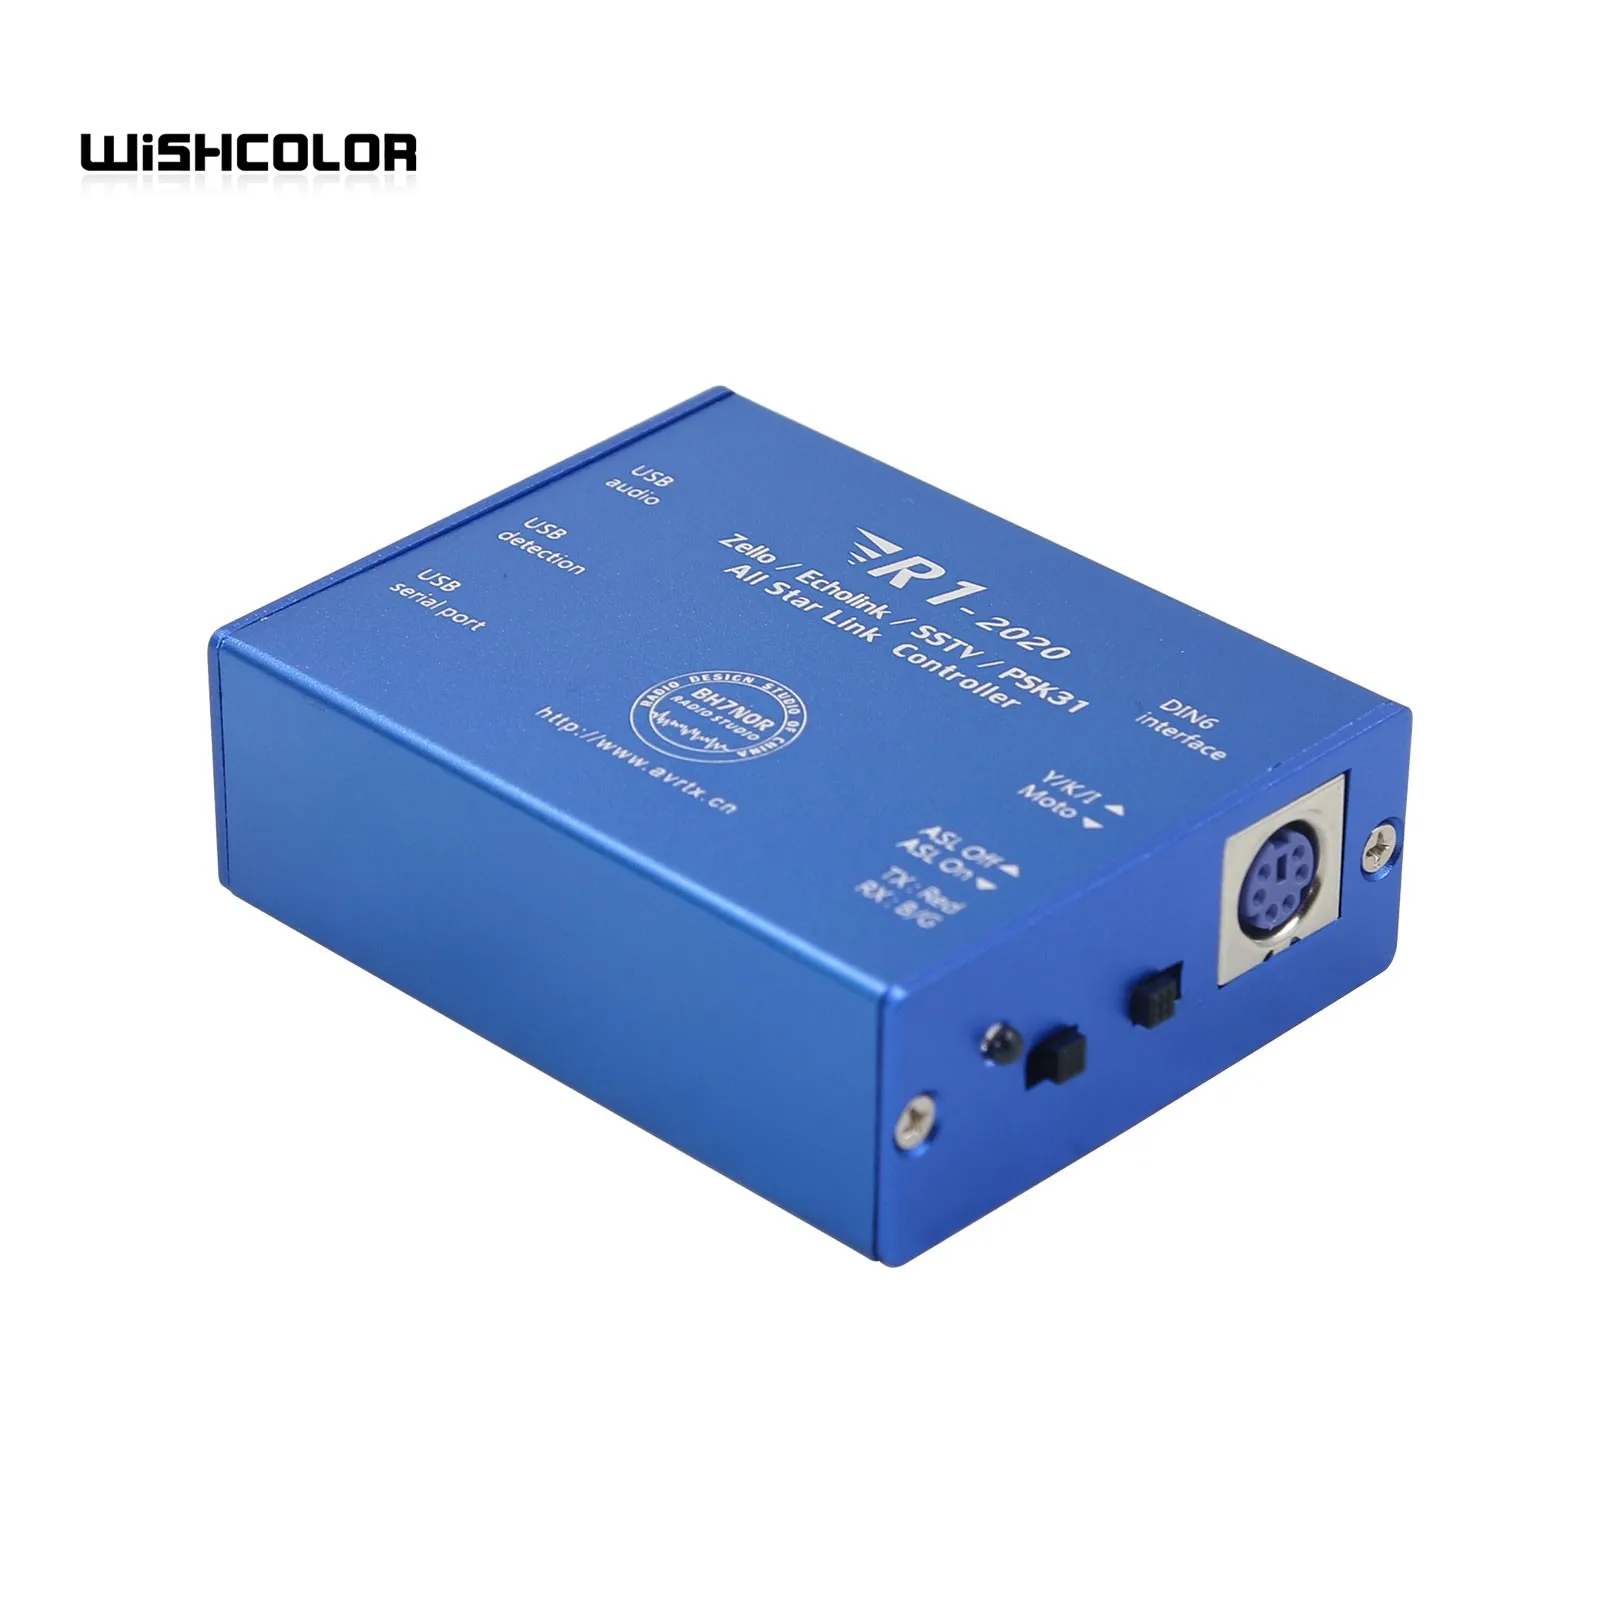 

Wishcolor New R1 Kit B USB Audio Interface All Star Link Controller USB Sound Card Version for Echolink SSTV PSK31 YY